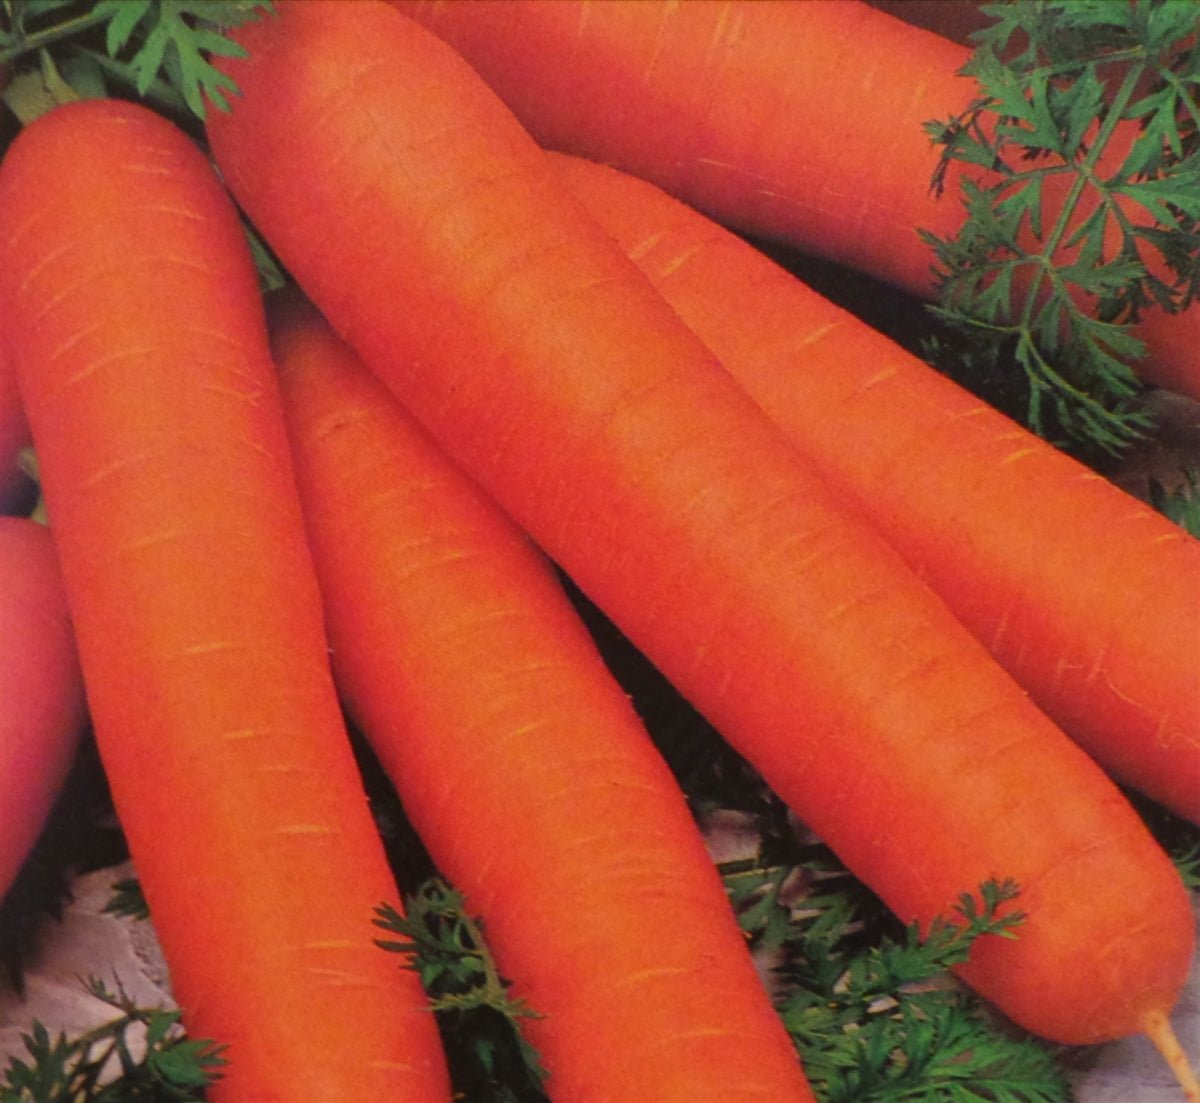 Carrot Nantes Coreless Seed - 1 Packet - Seed Barn